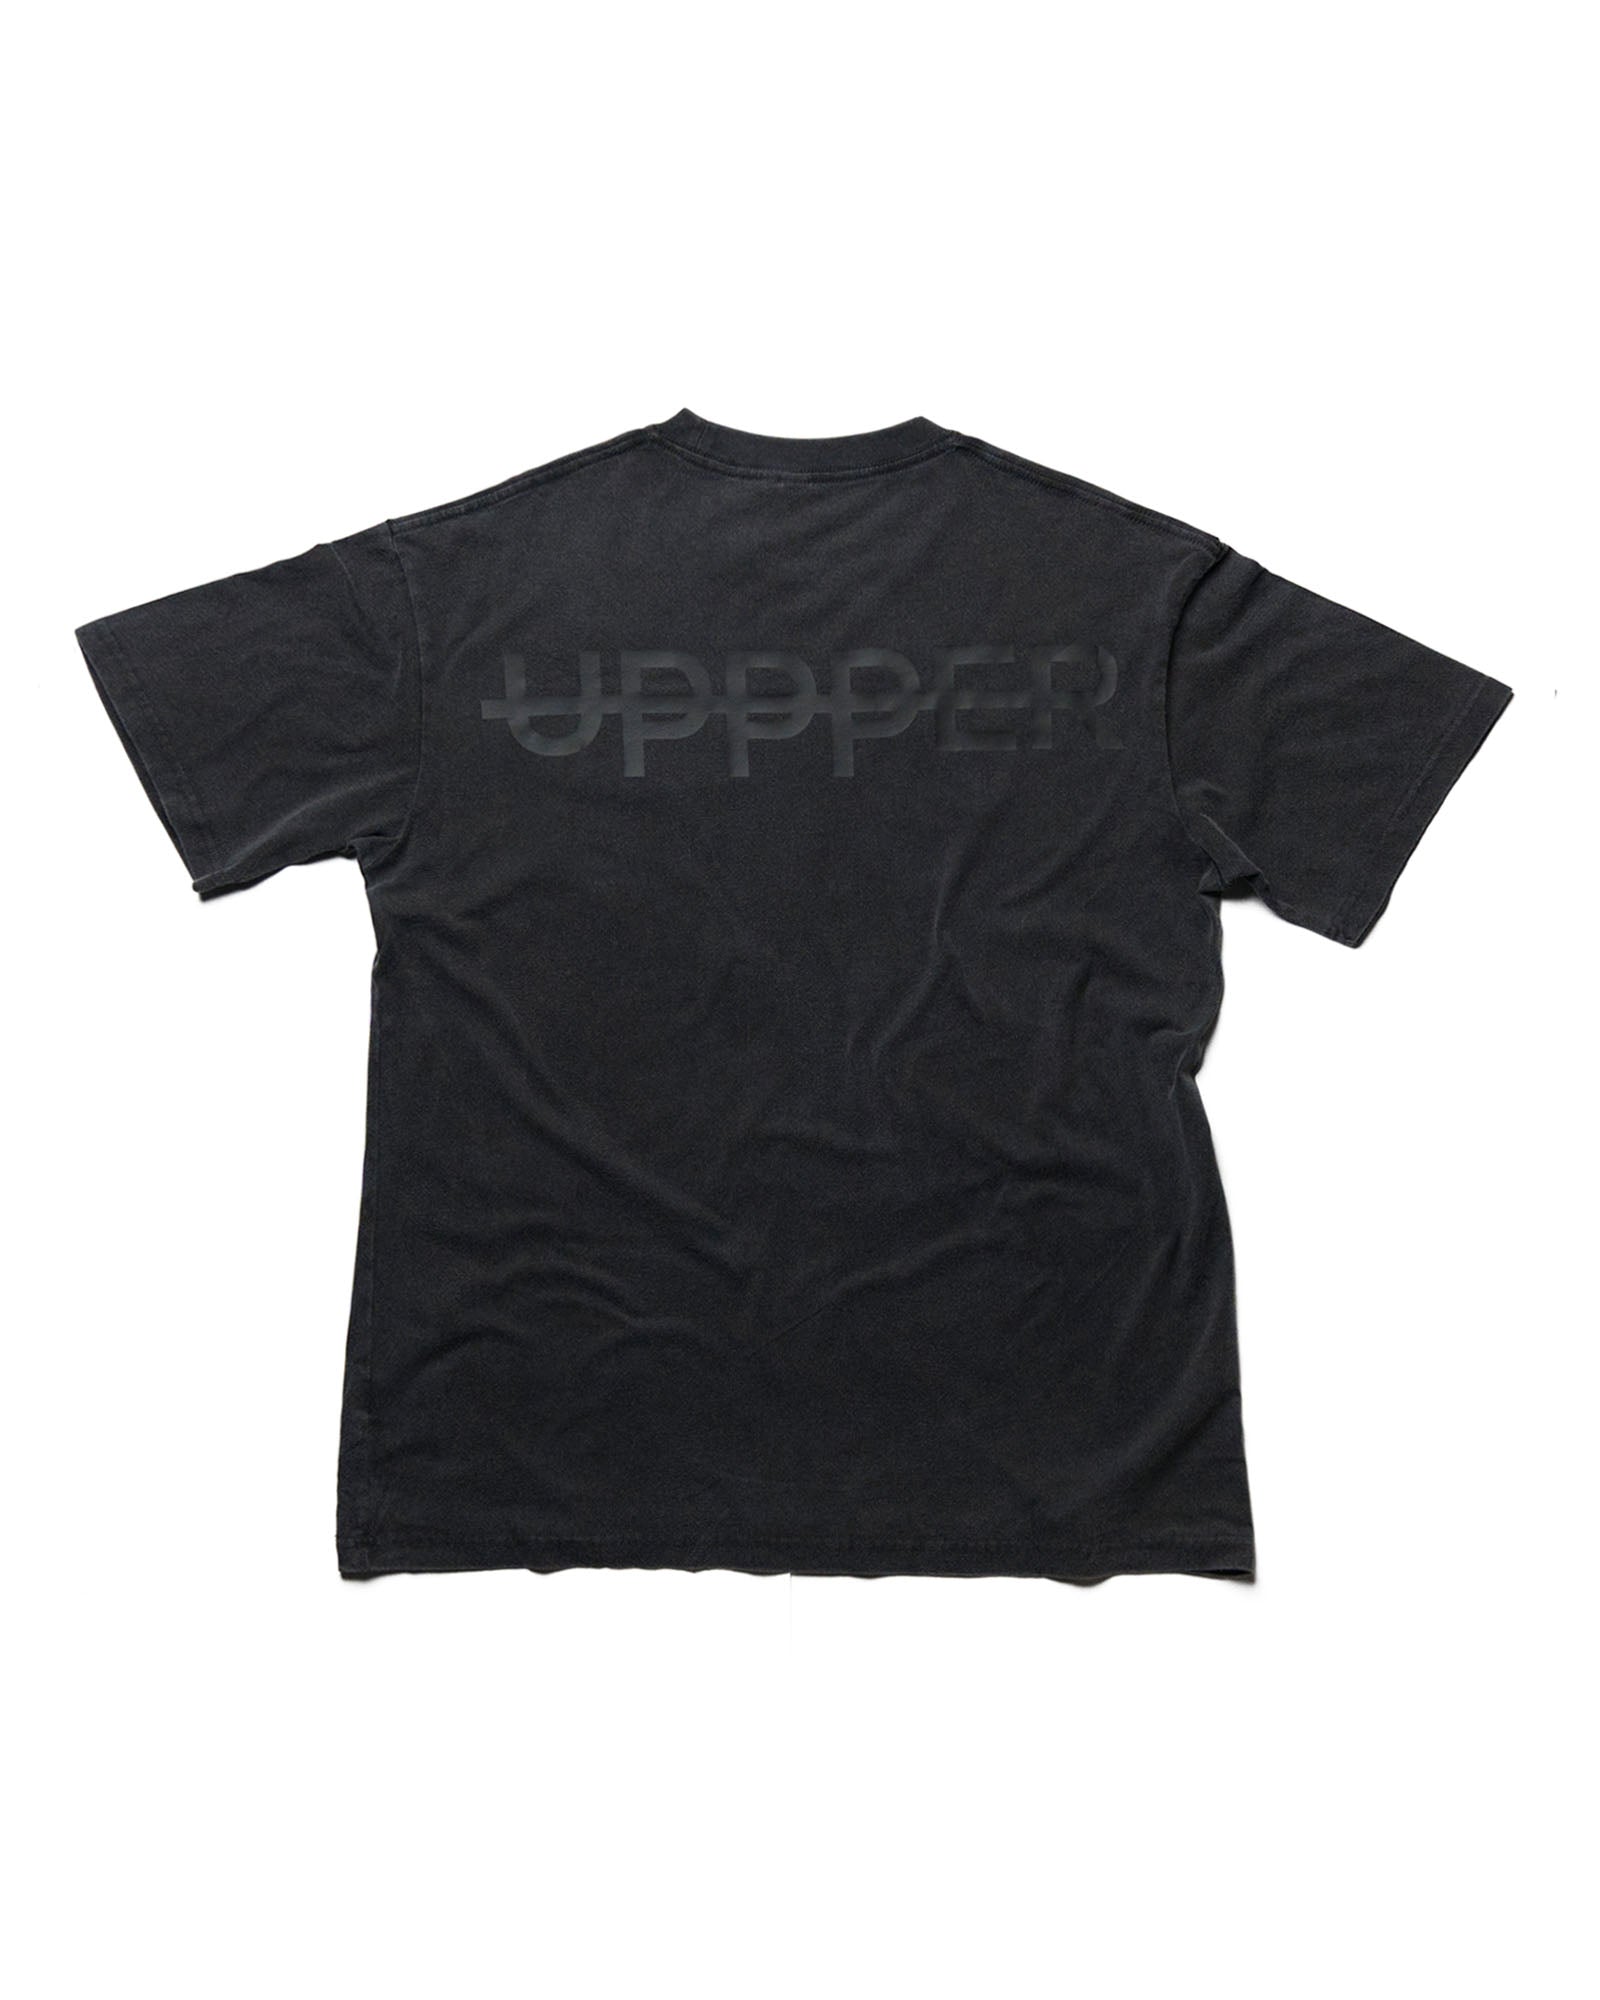 uppper core t-shirt washed black w/ black logo